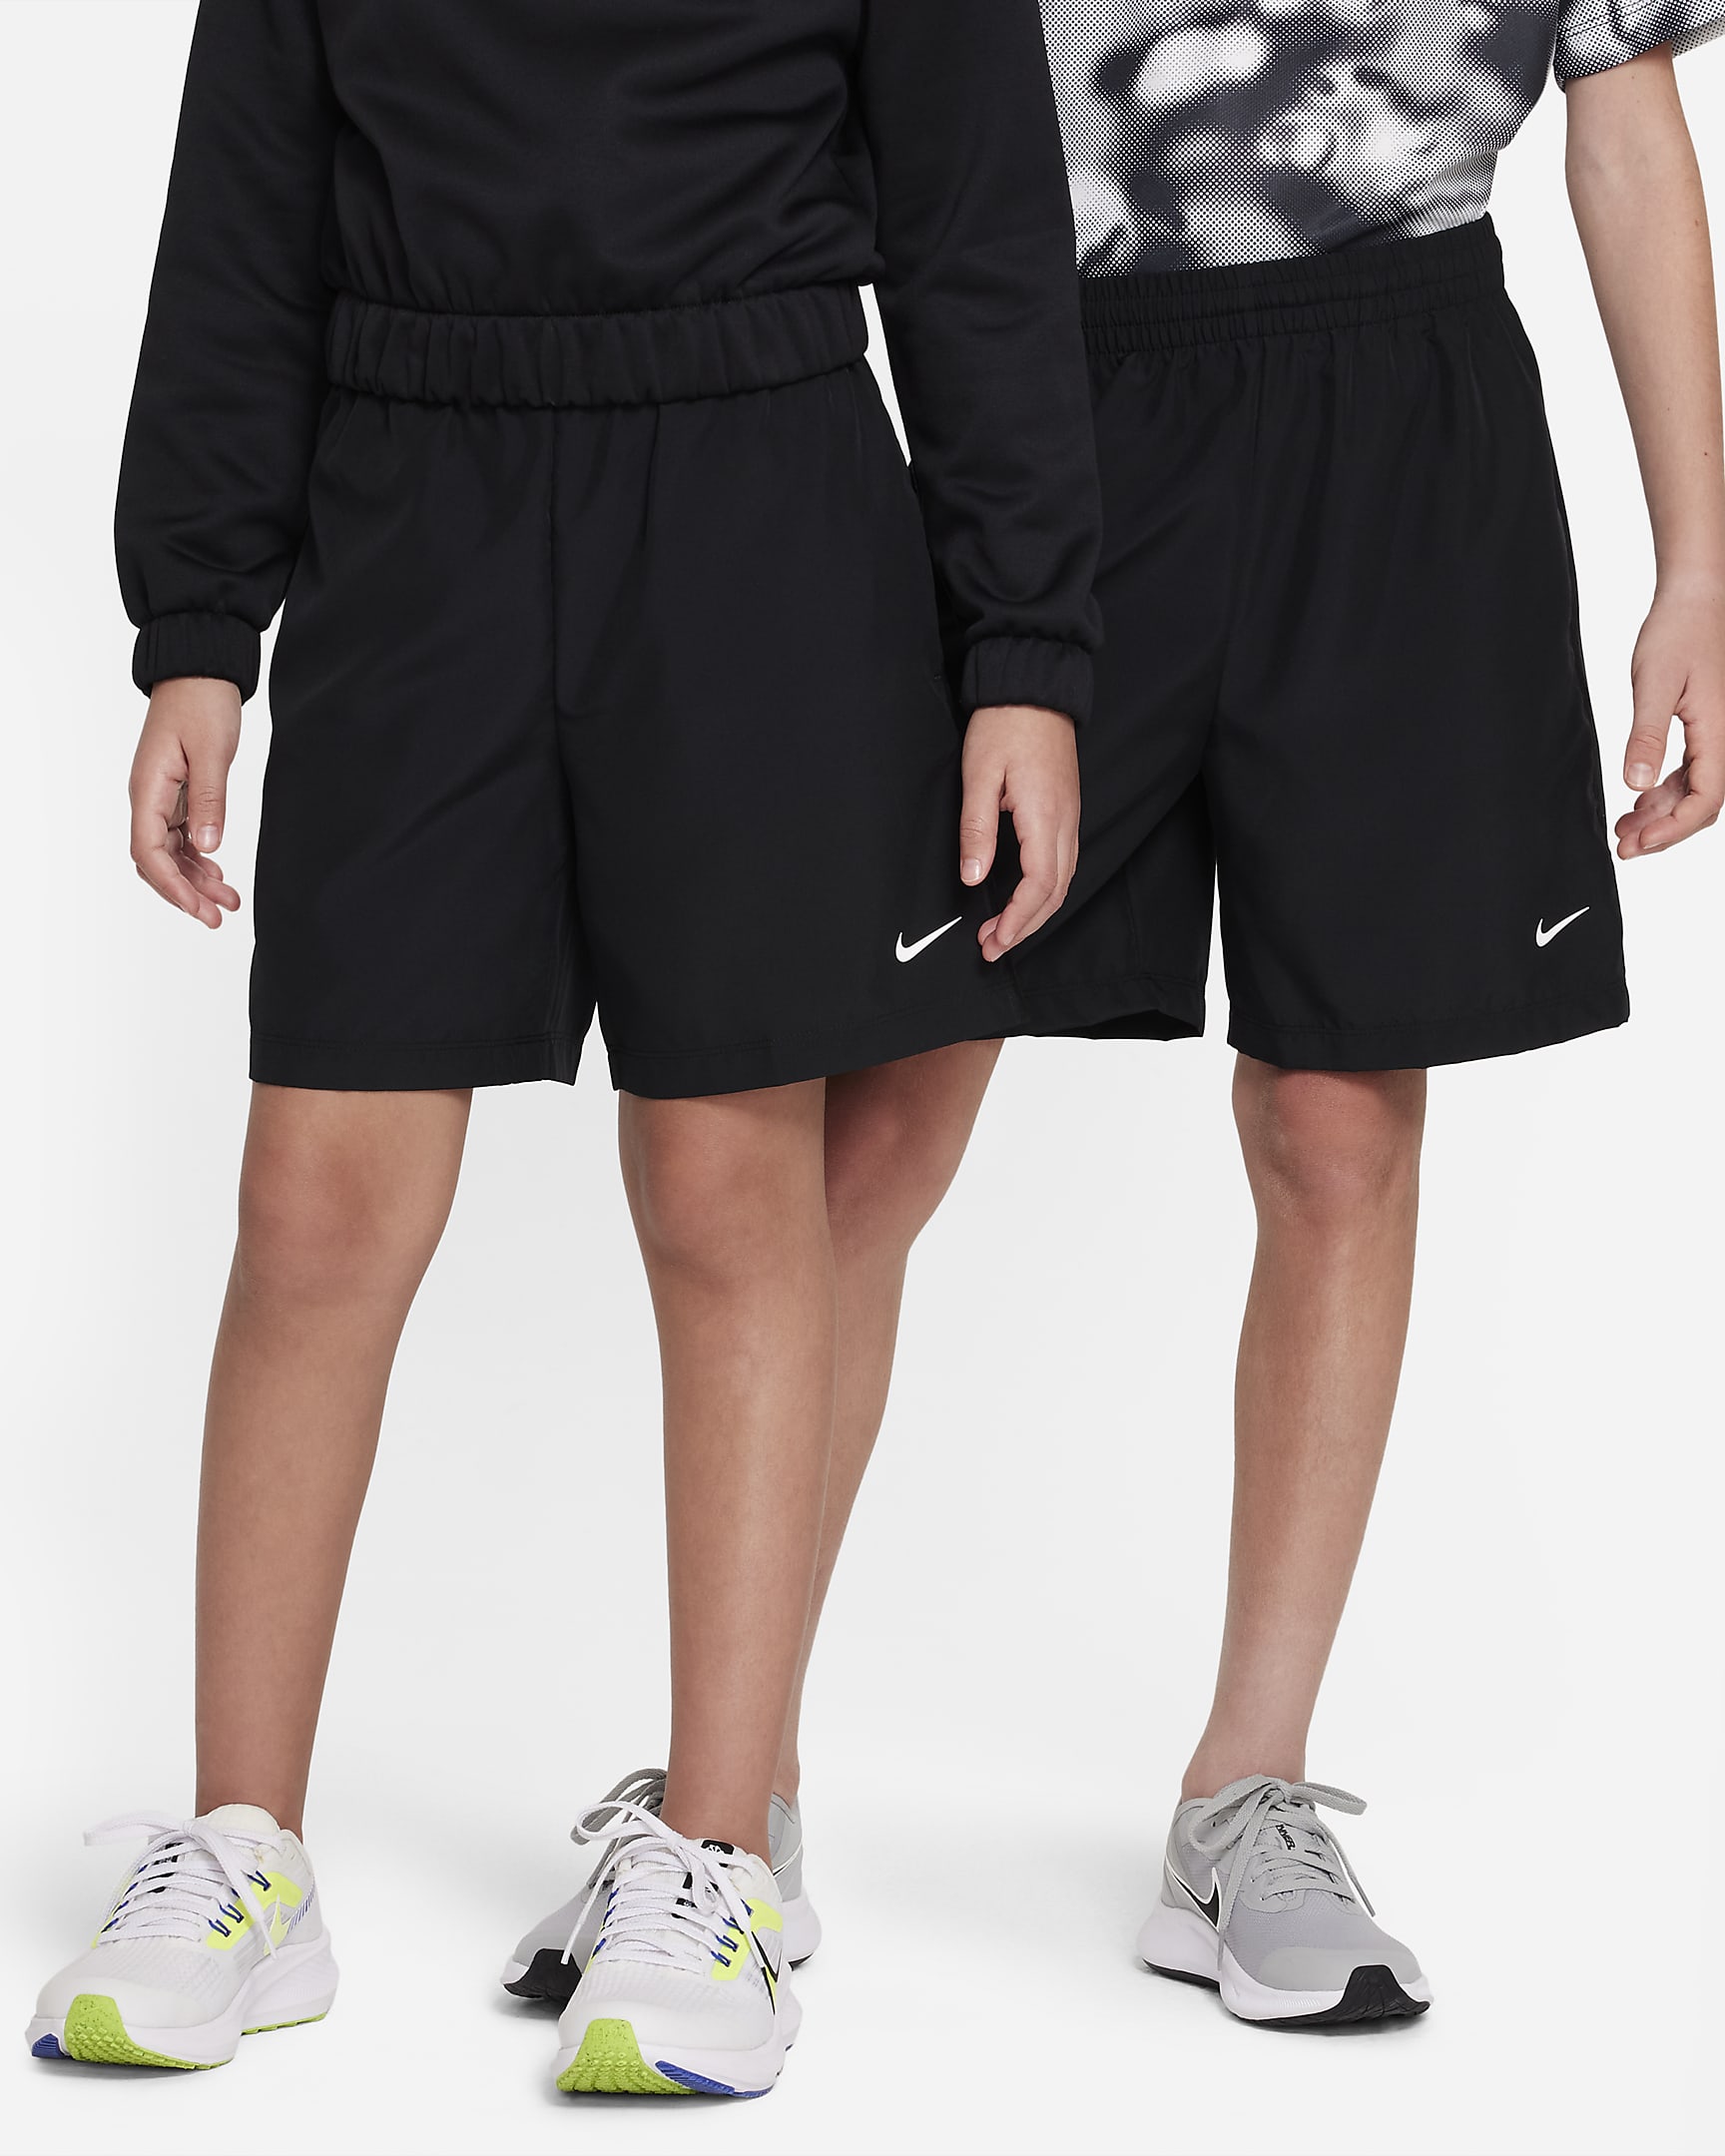 Nike Multi Dri-FIT trainingsshorts voor jongens - Zwart/Wit